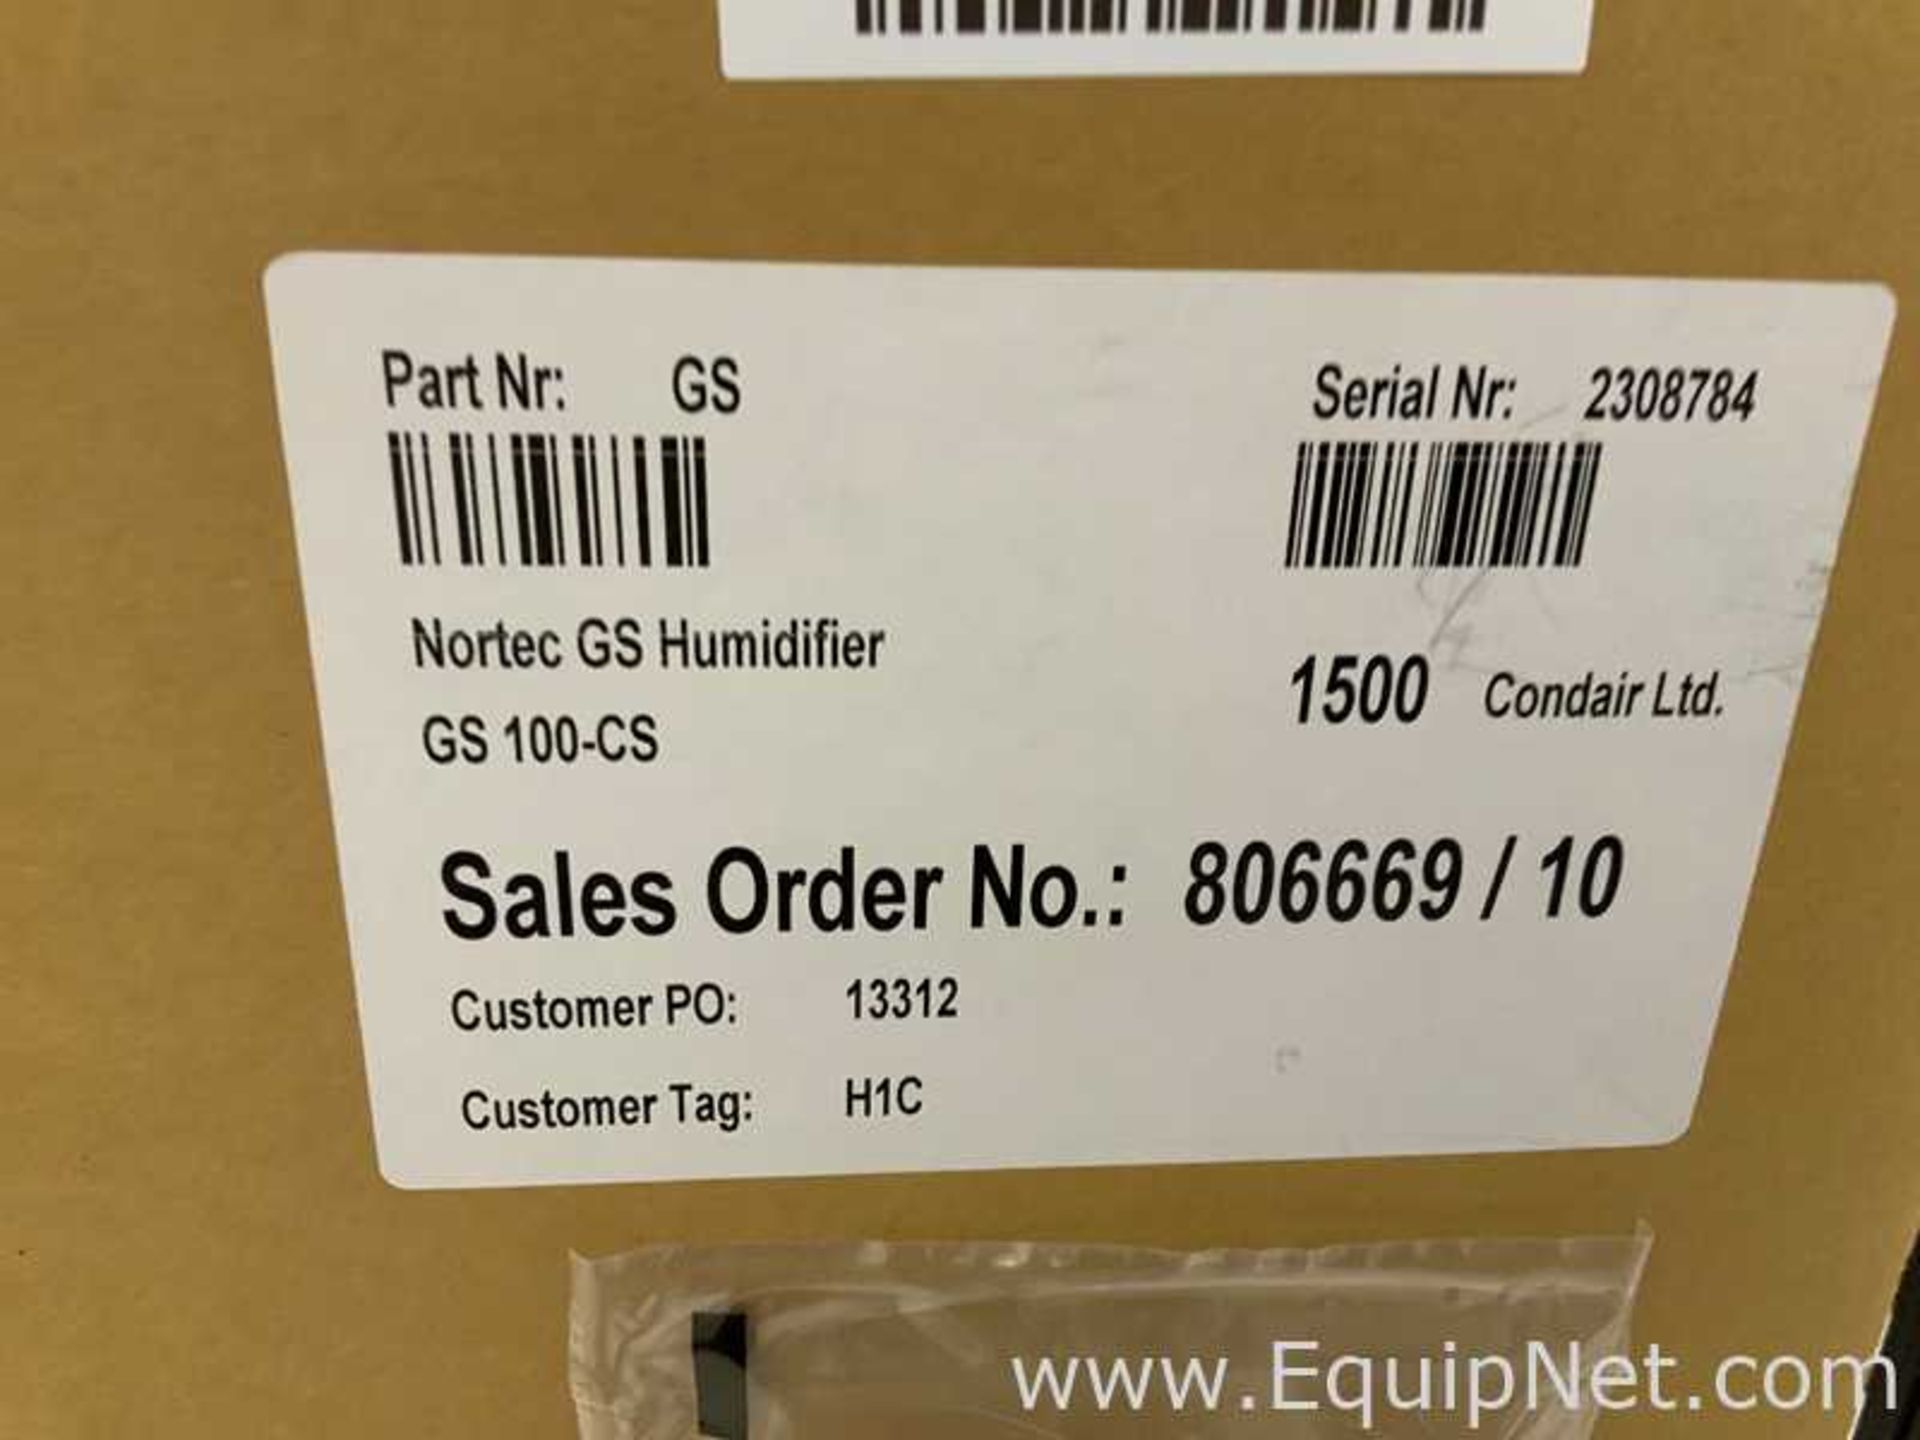 Unused Condair GS 100-CS Nortec GS Humidifier - Image 2 of 6